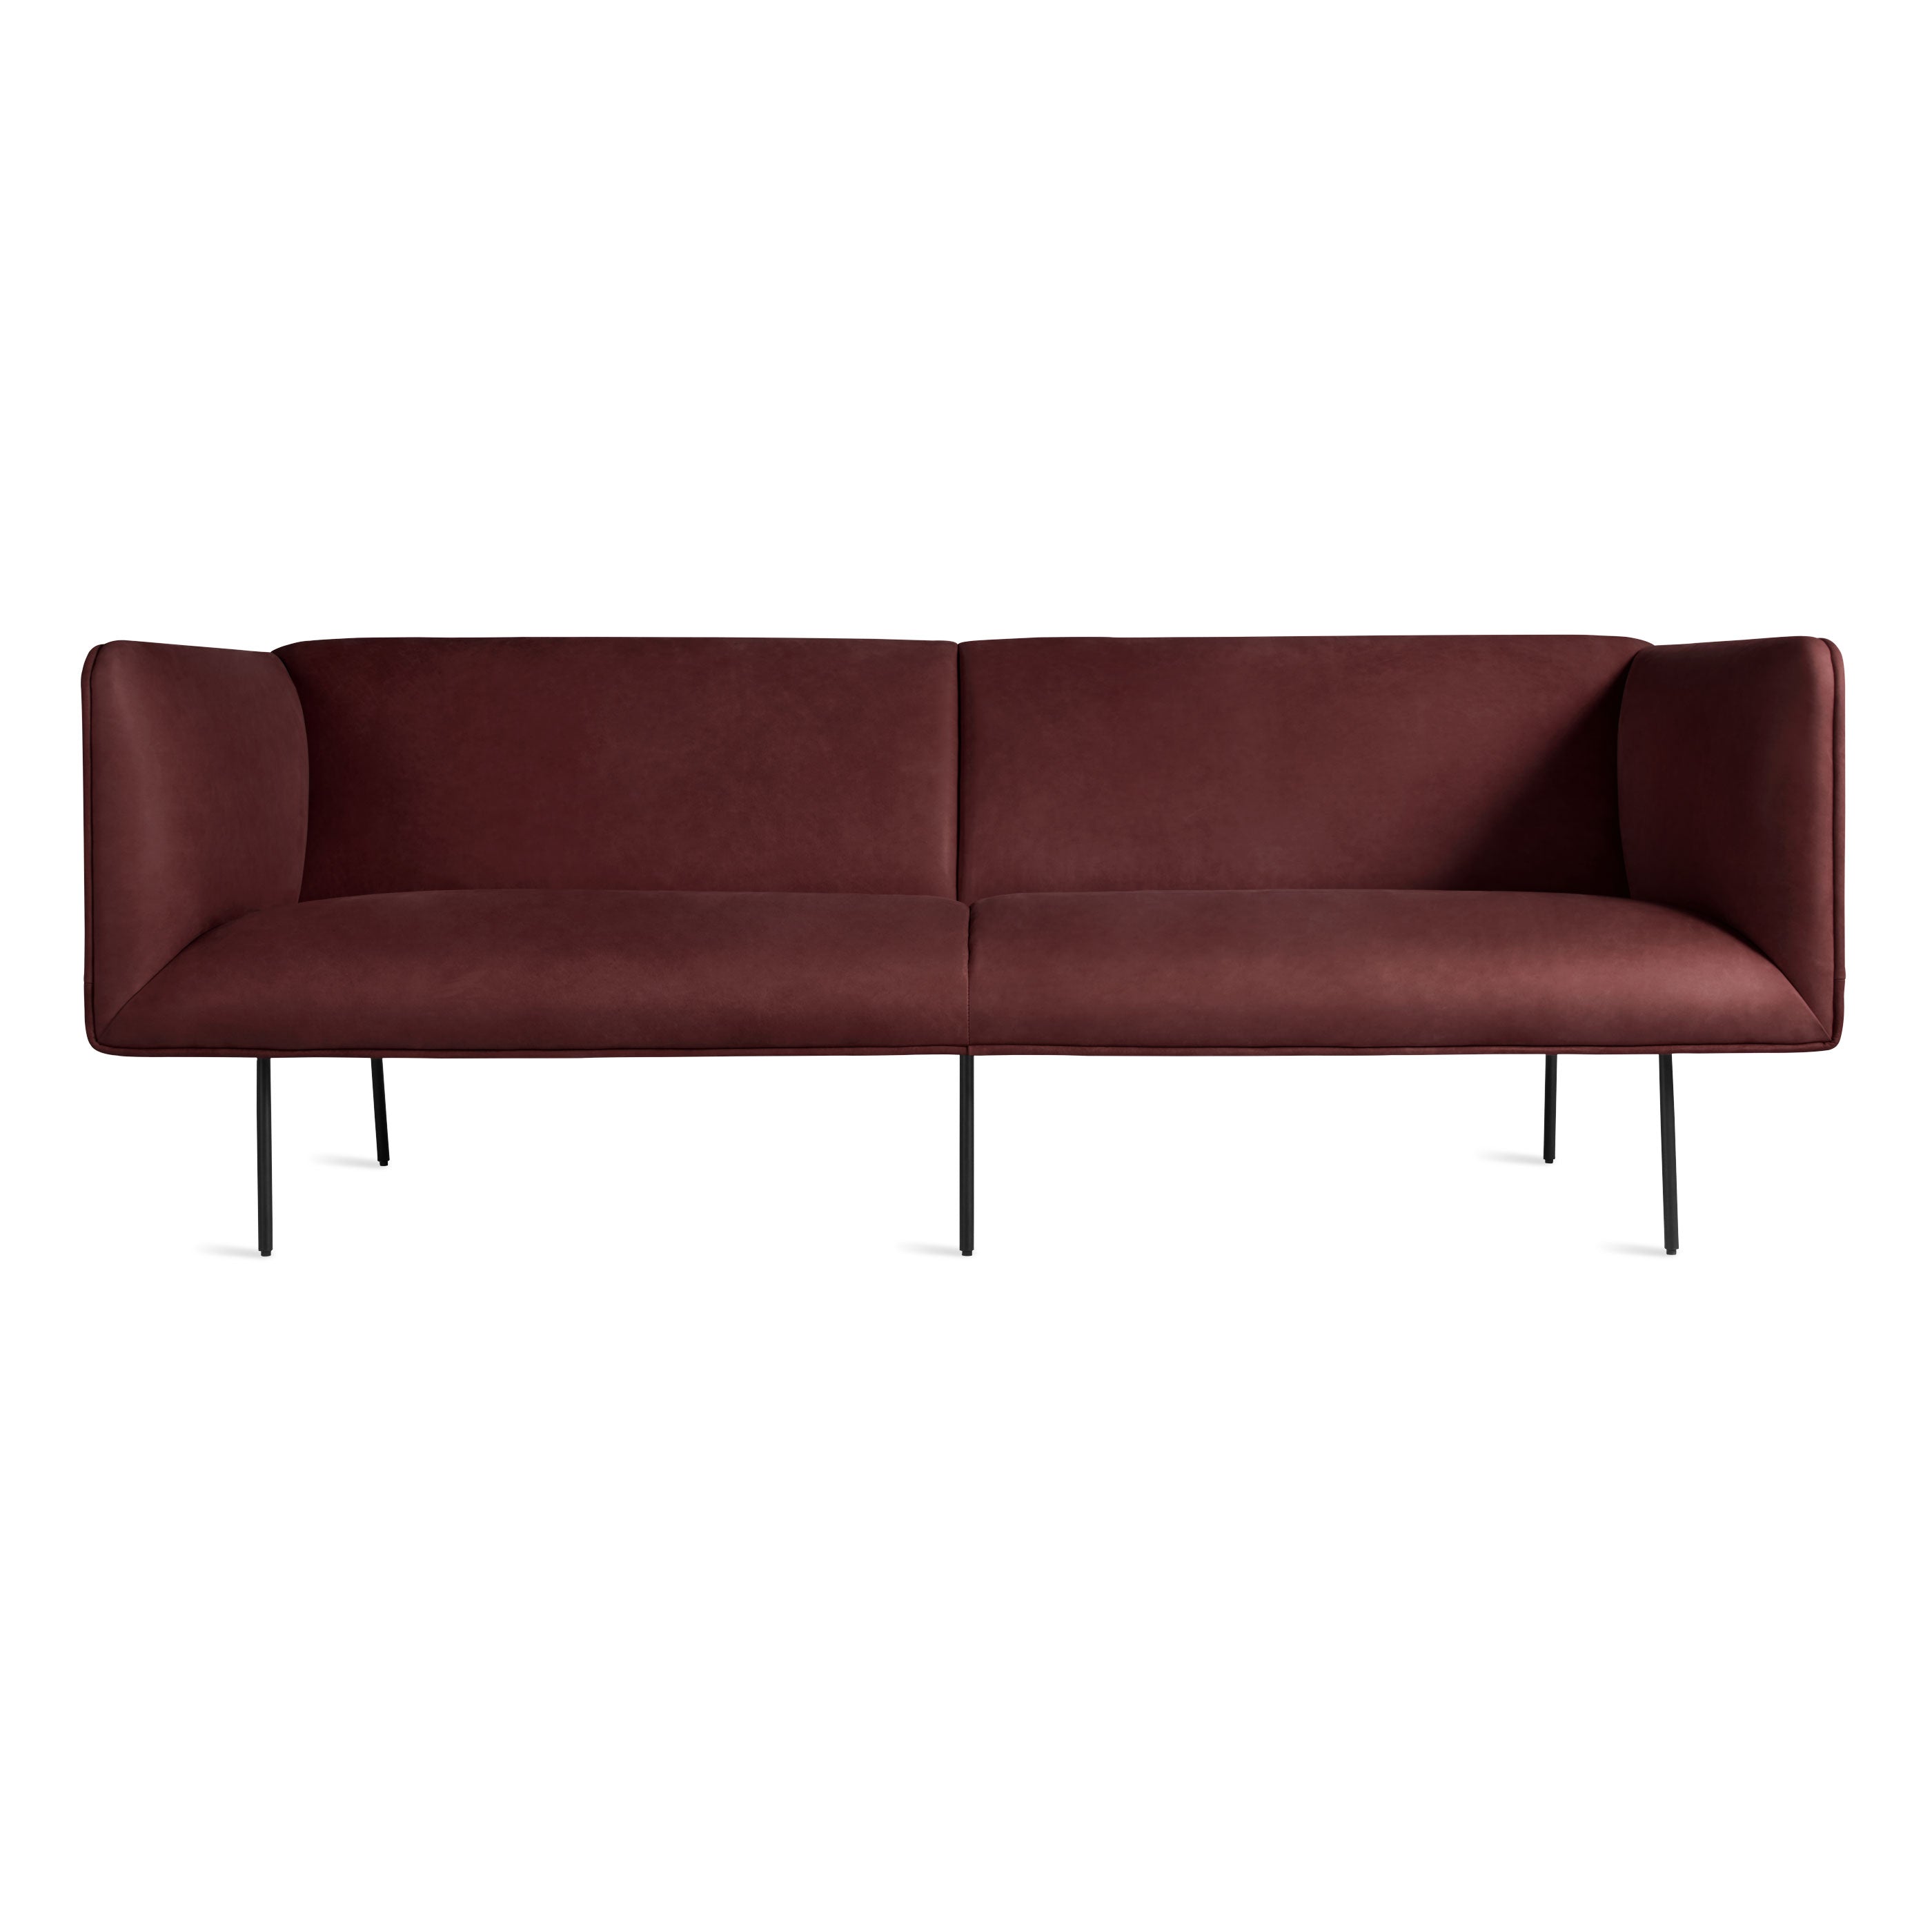 Dandy 96" Leather Sofa